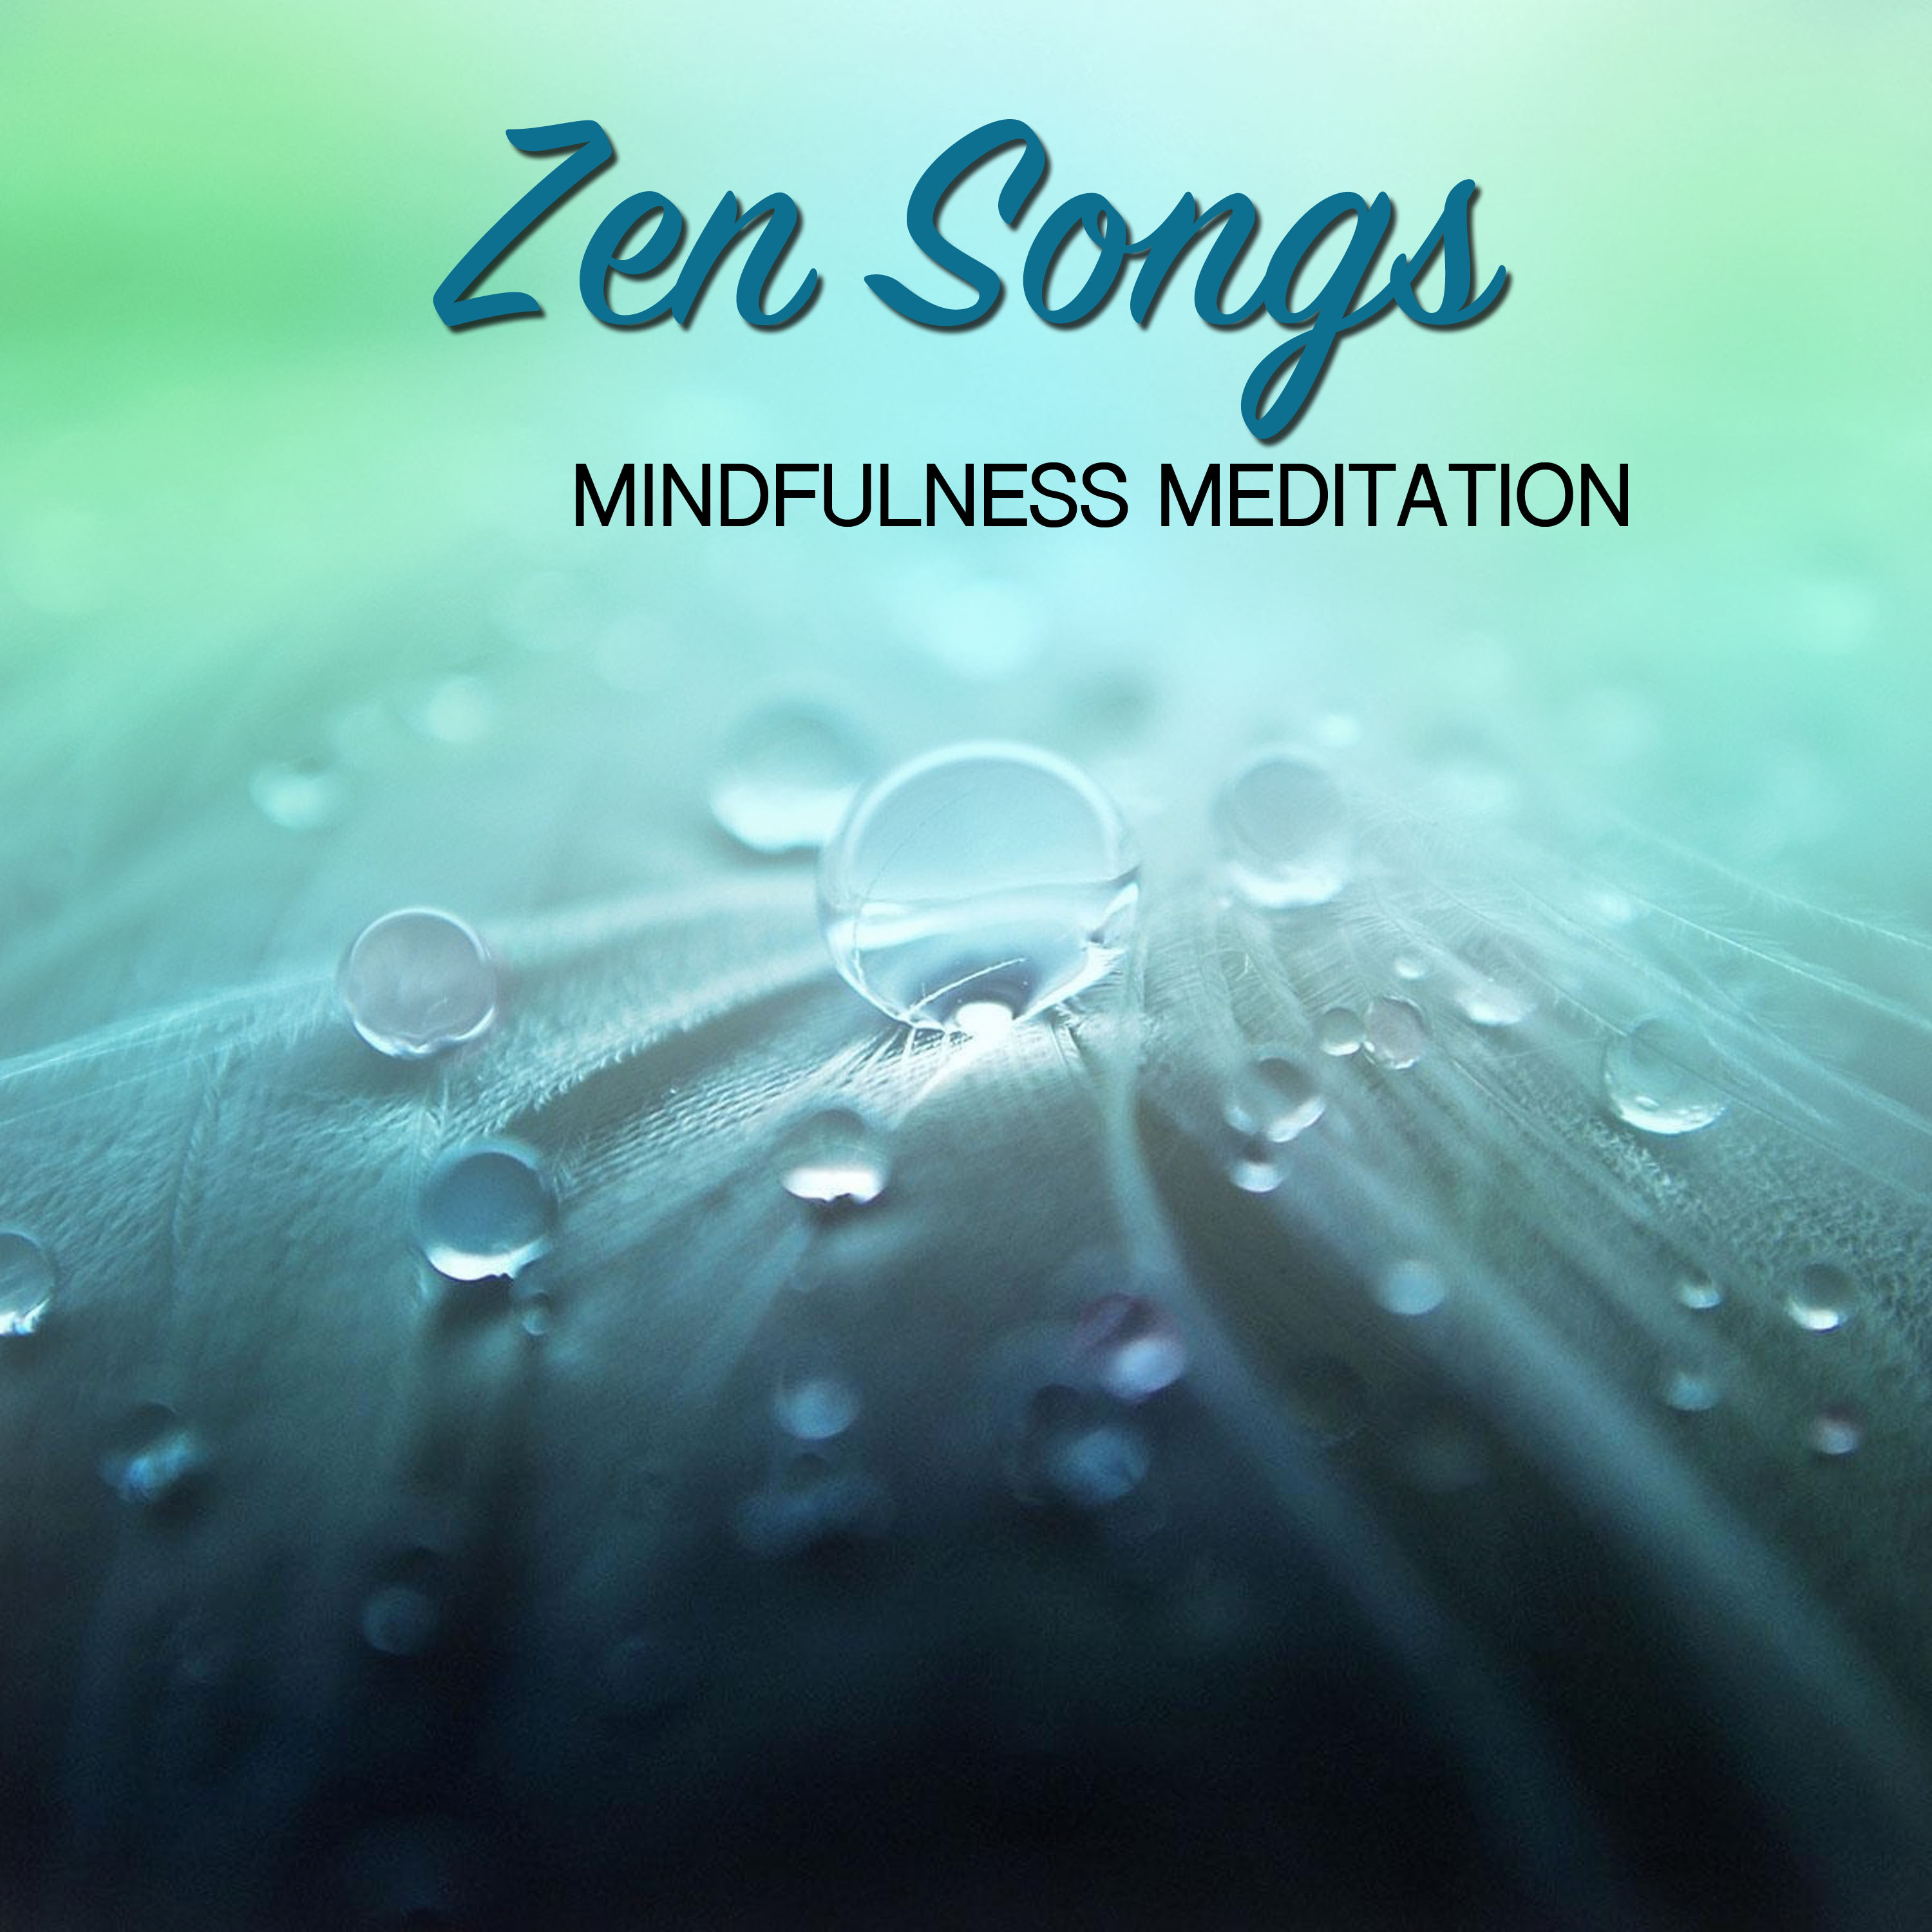 21 Calming Zen Songs for Mindfulness Meditation